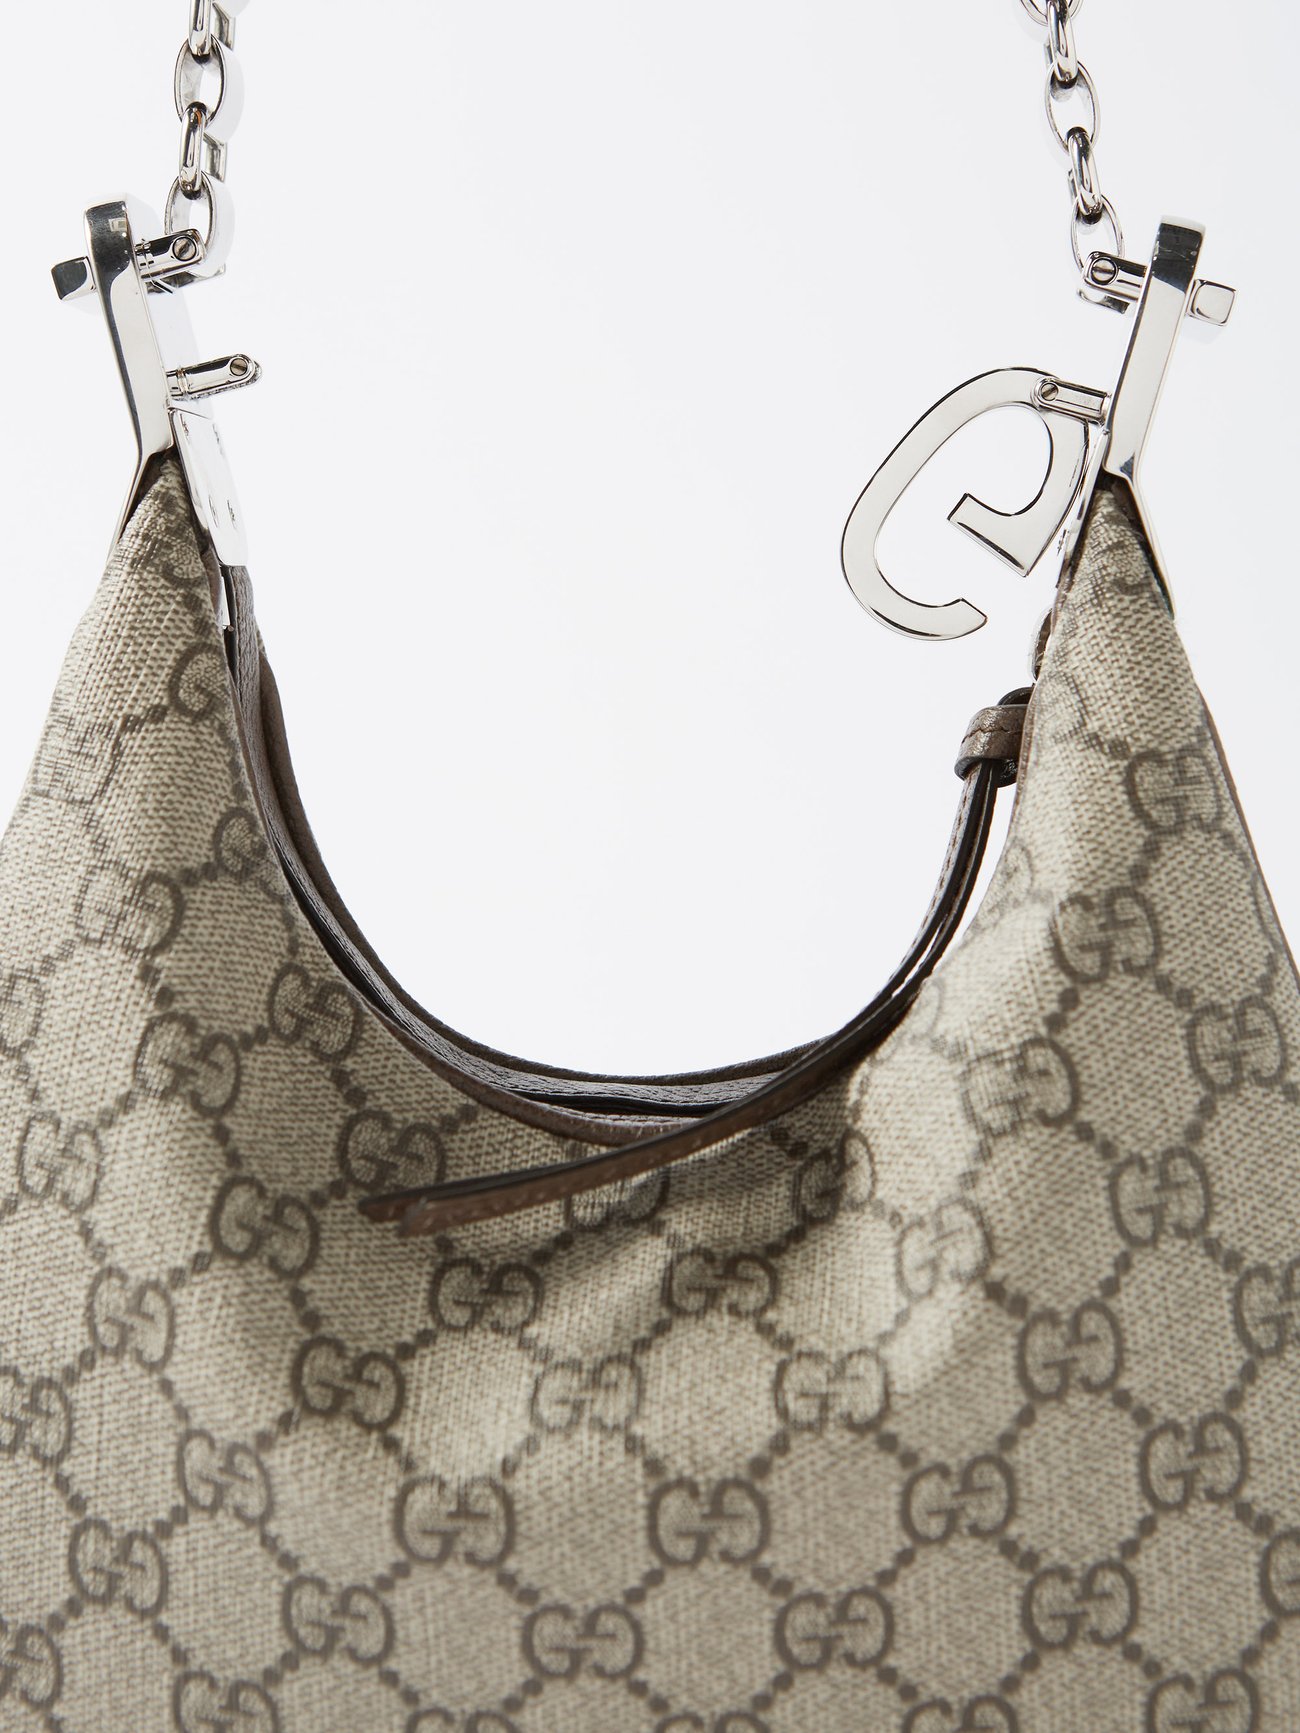 Gucci Attache medium shoulder bag beige and blue GG supreme with 2 straps